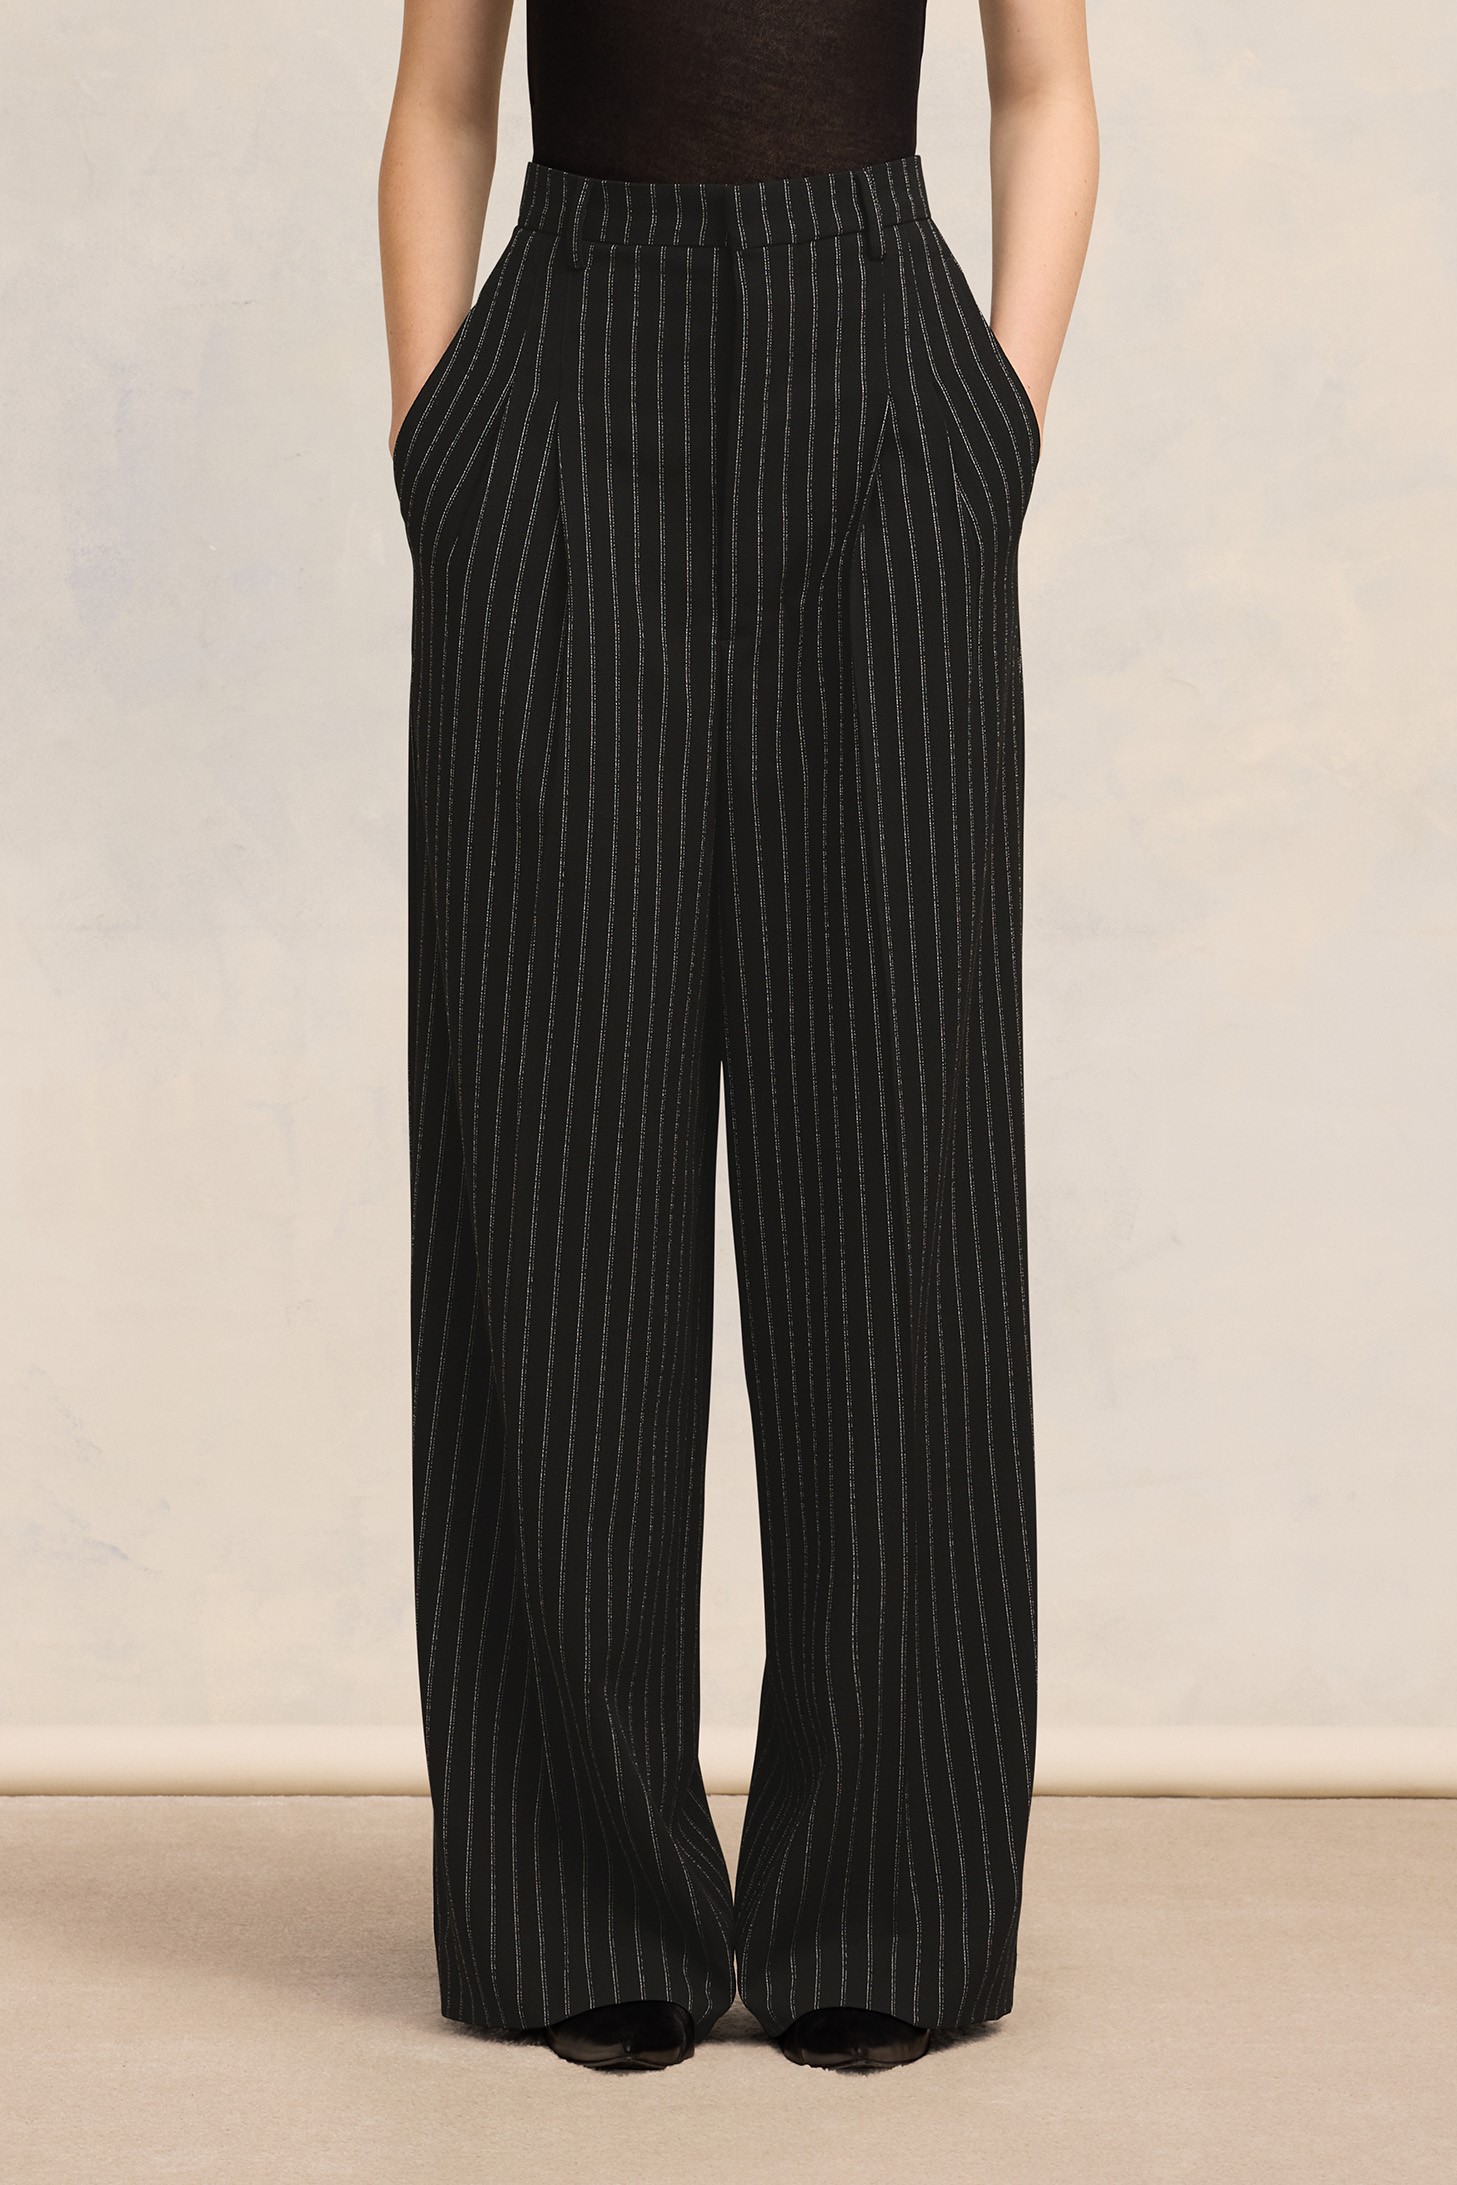 AMI PARIS High Waist Large Trouser in Black/Chalk FR36 / DE34